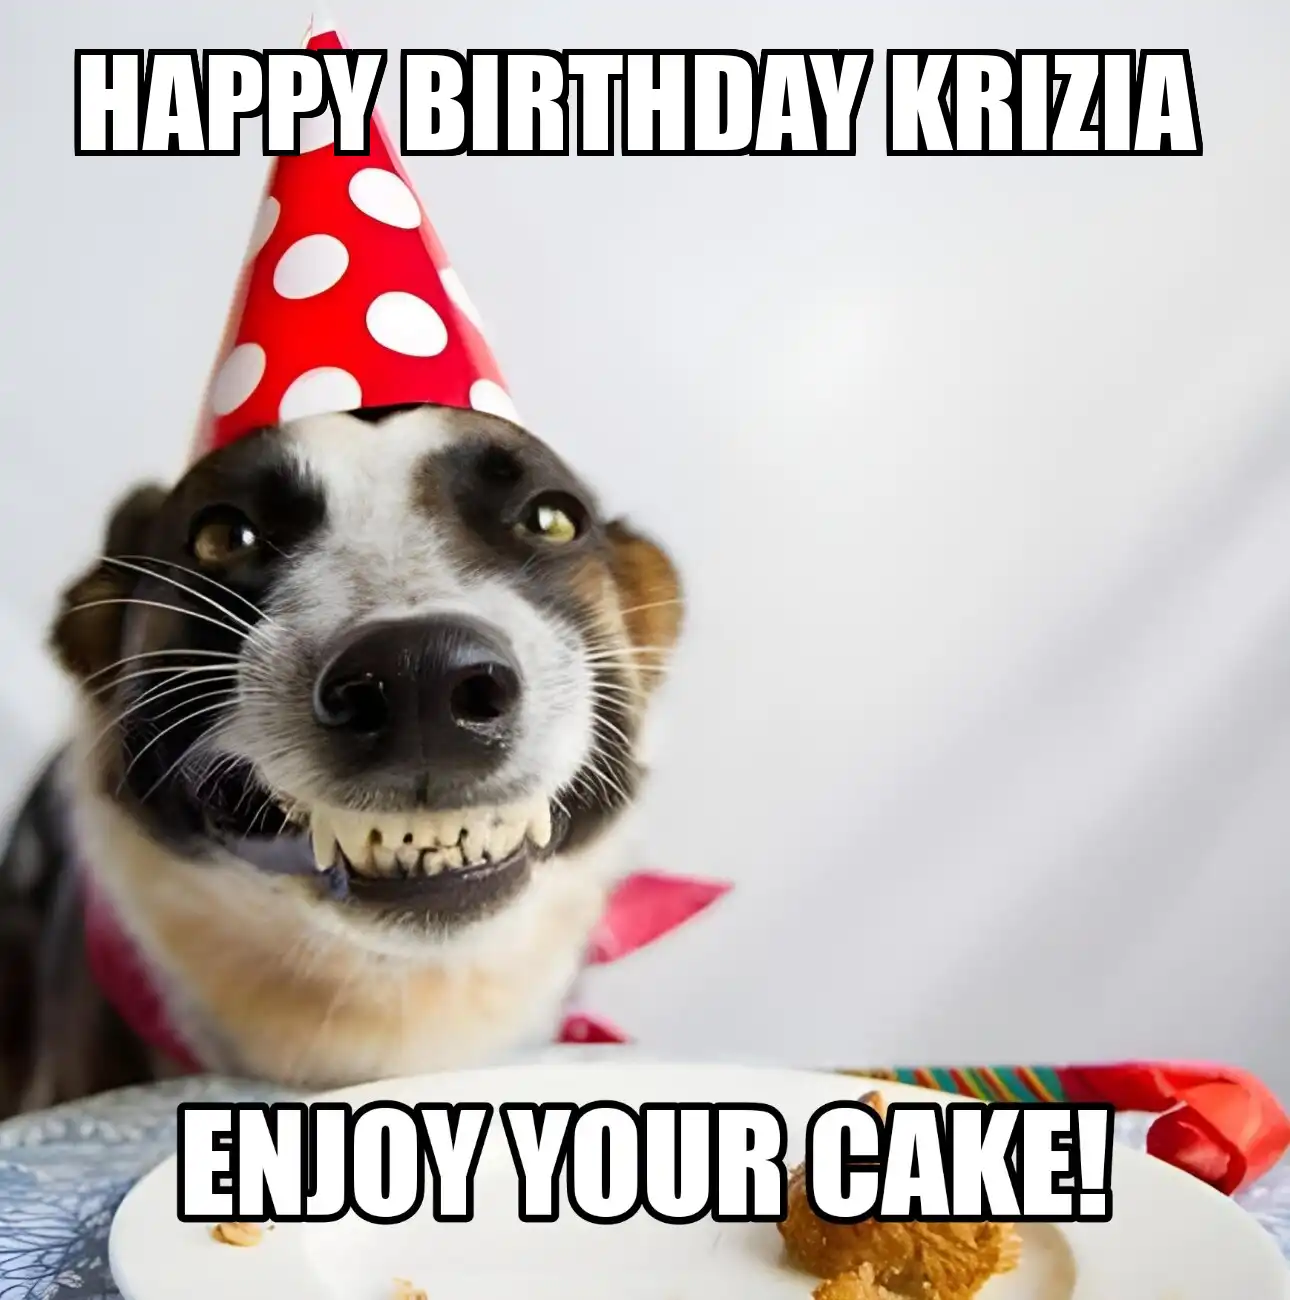 Happy Birthday Krizia Enjoy Your Cake Dog Meme